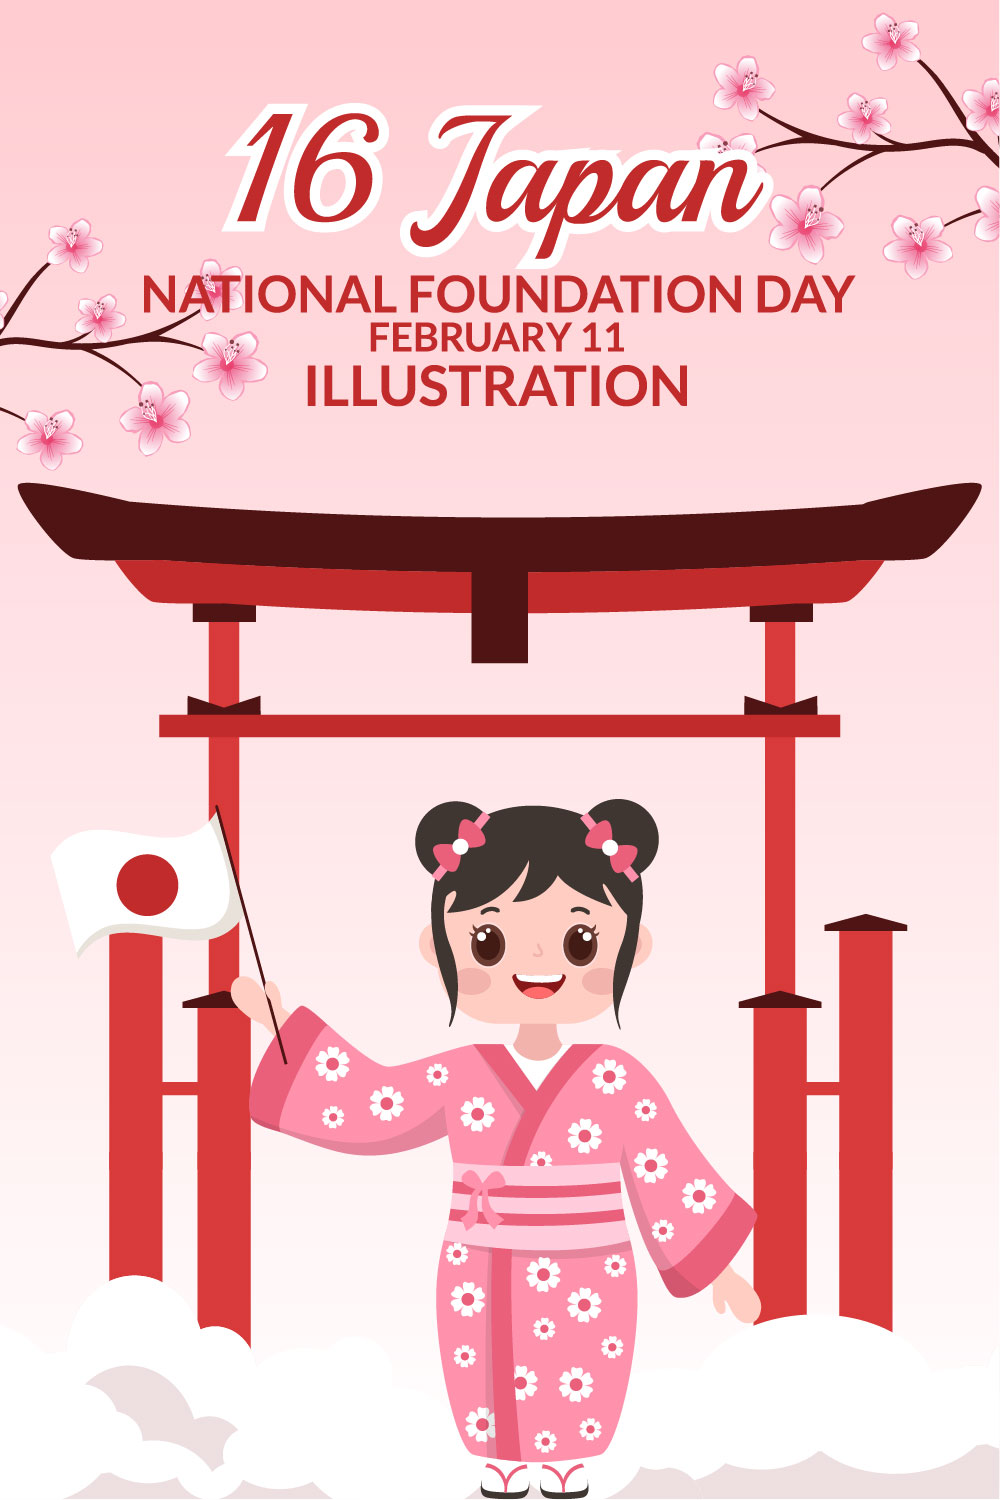 16 Japan National Foundation Day Illustration - pinterest image preview.